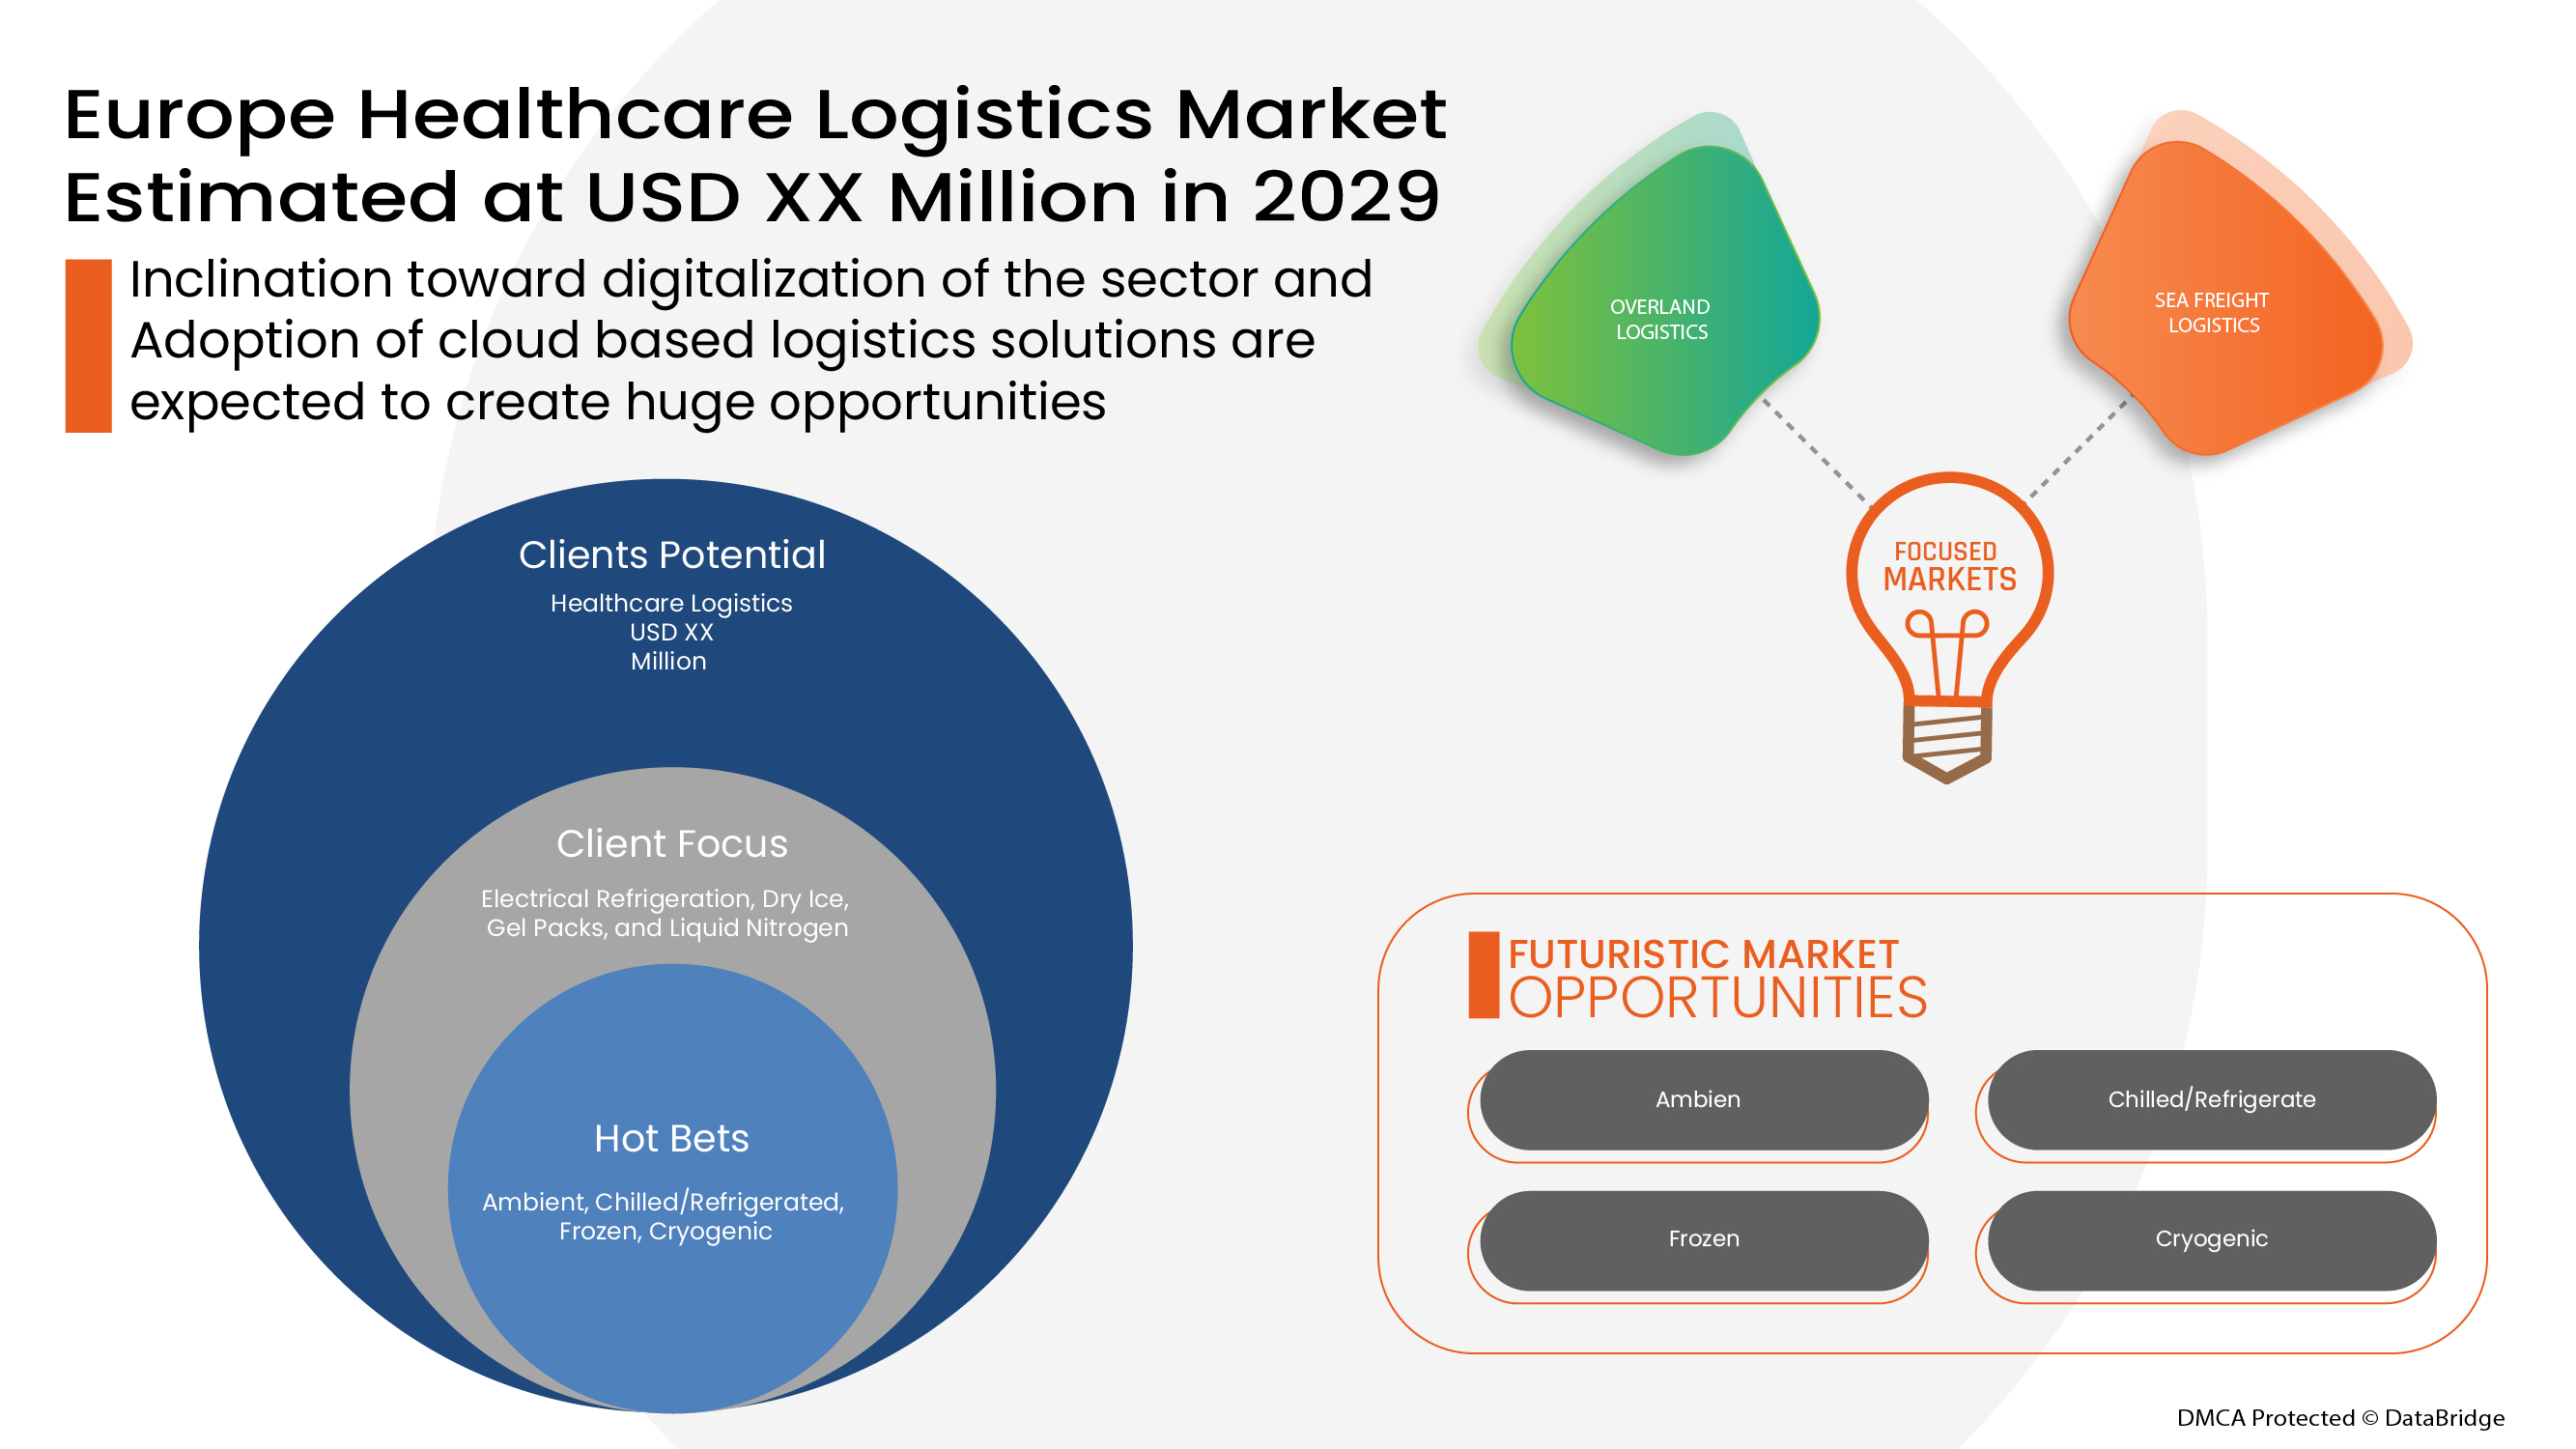 Europe Healthcare Logistics Market 